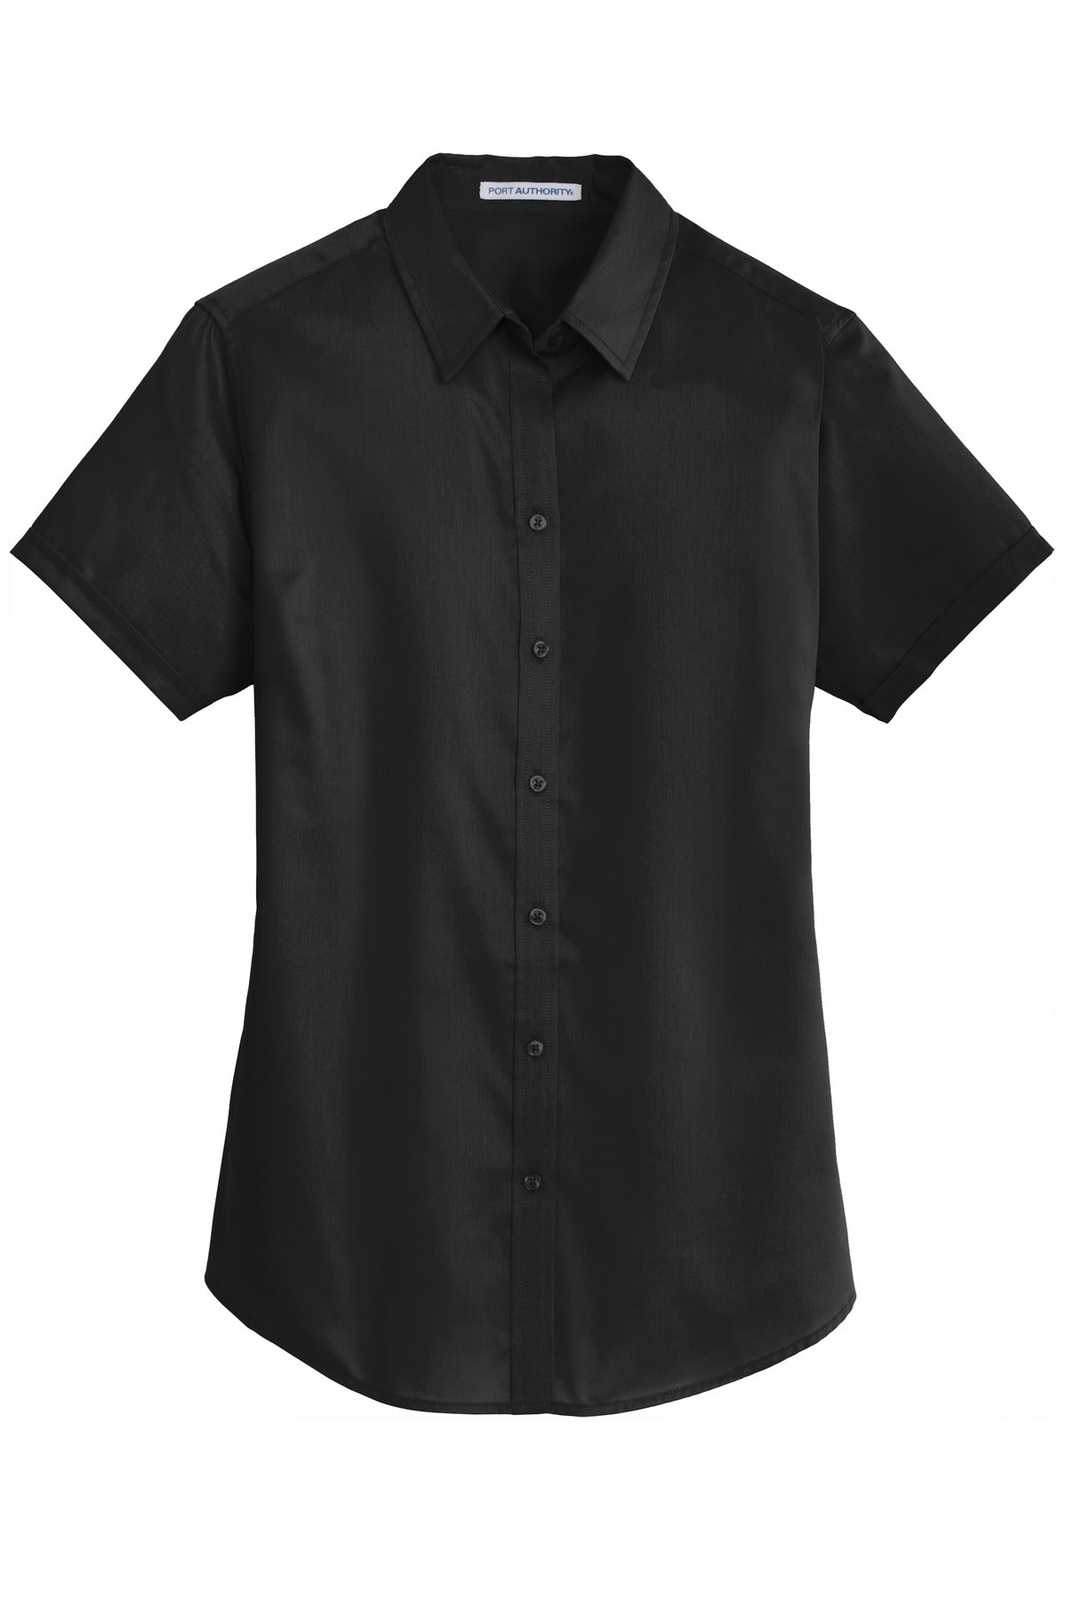 Port Authority L664 Ladies Short Sleeve Superpro Twill Shirt - Black - HIT a Double - 5